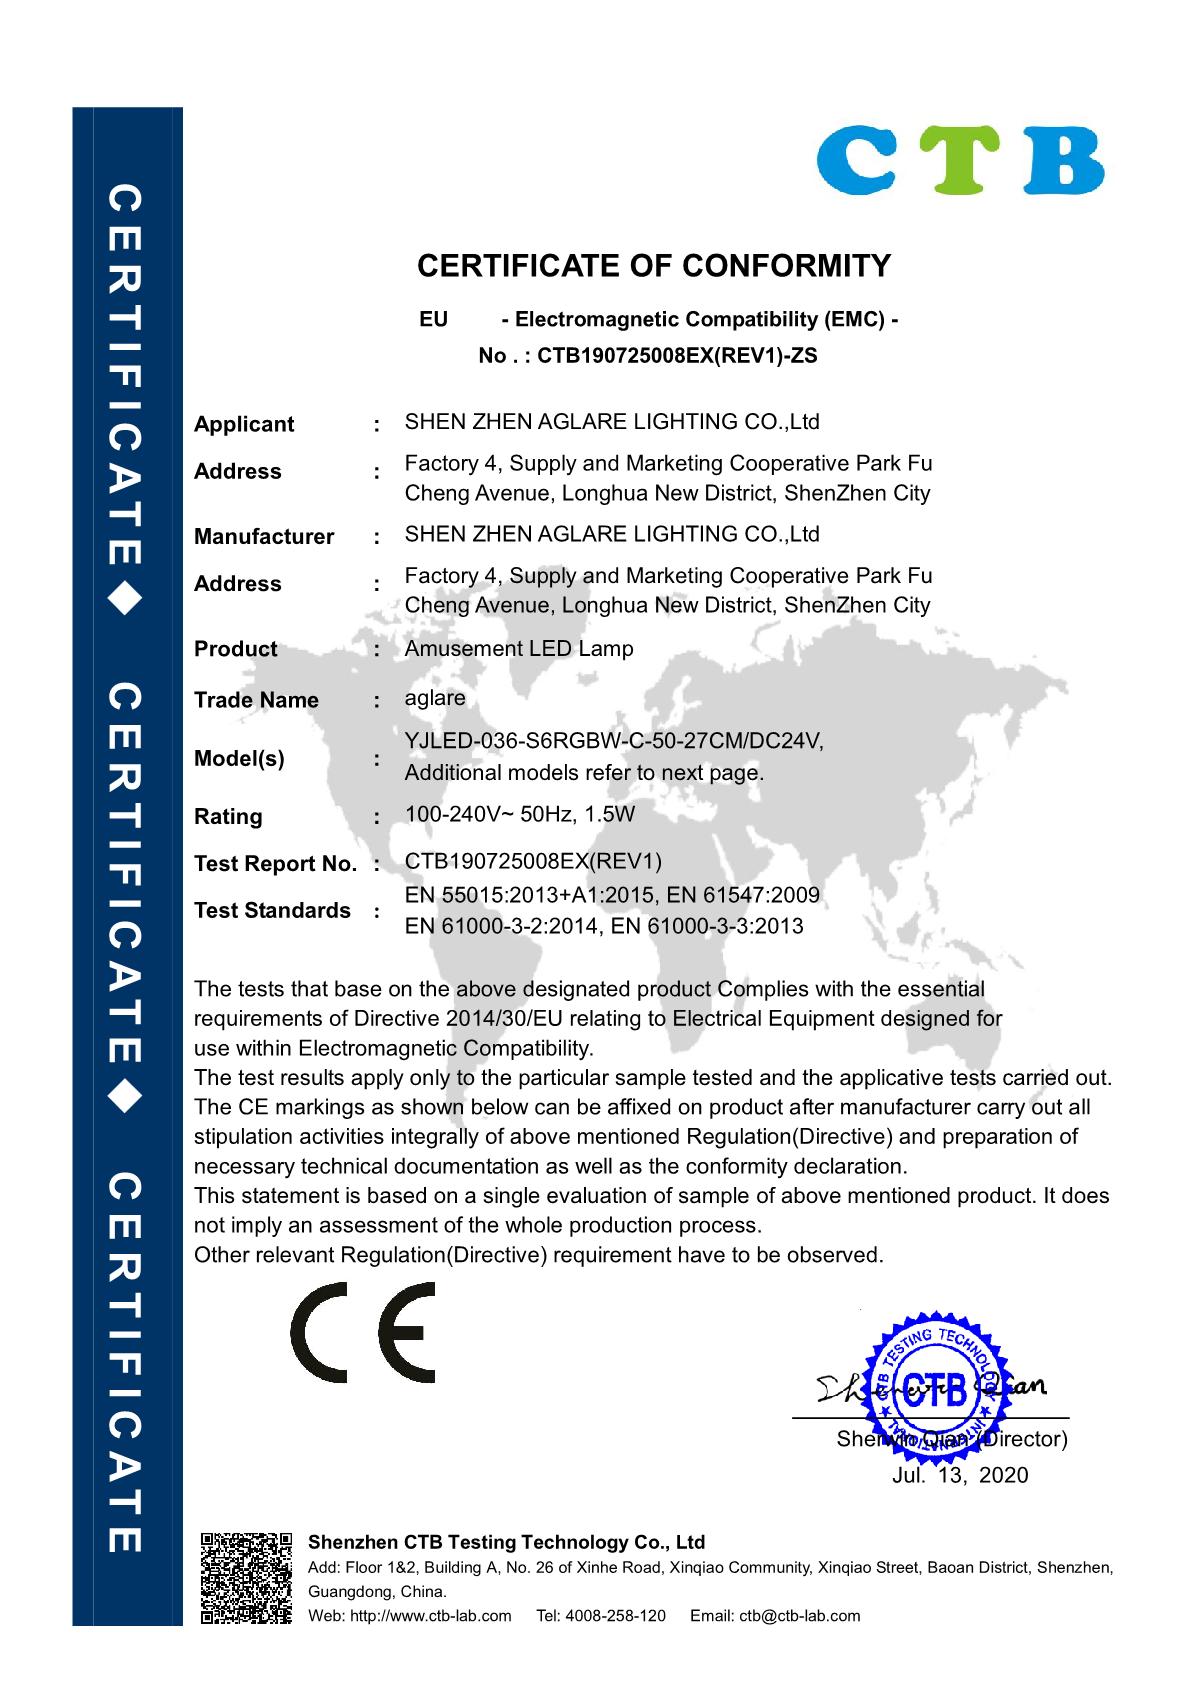 Aglare Lighting Amusement LED Lamp-CE EMC  certificate